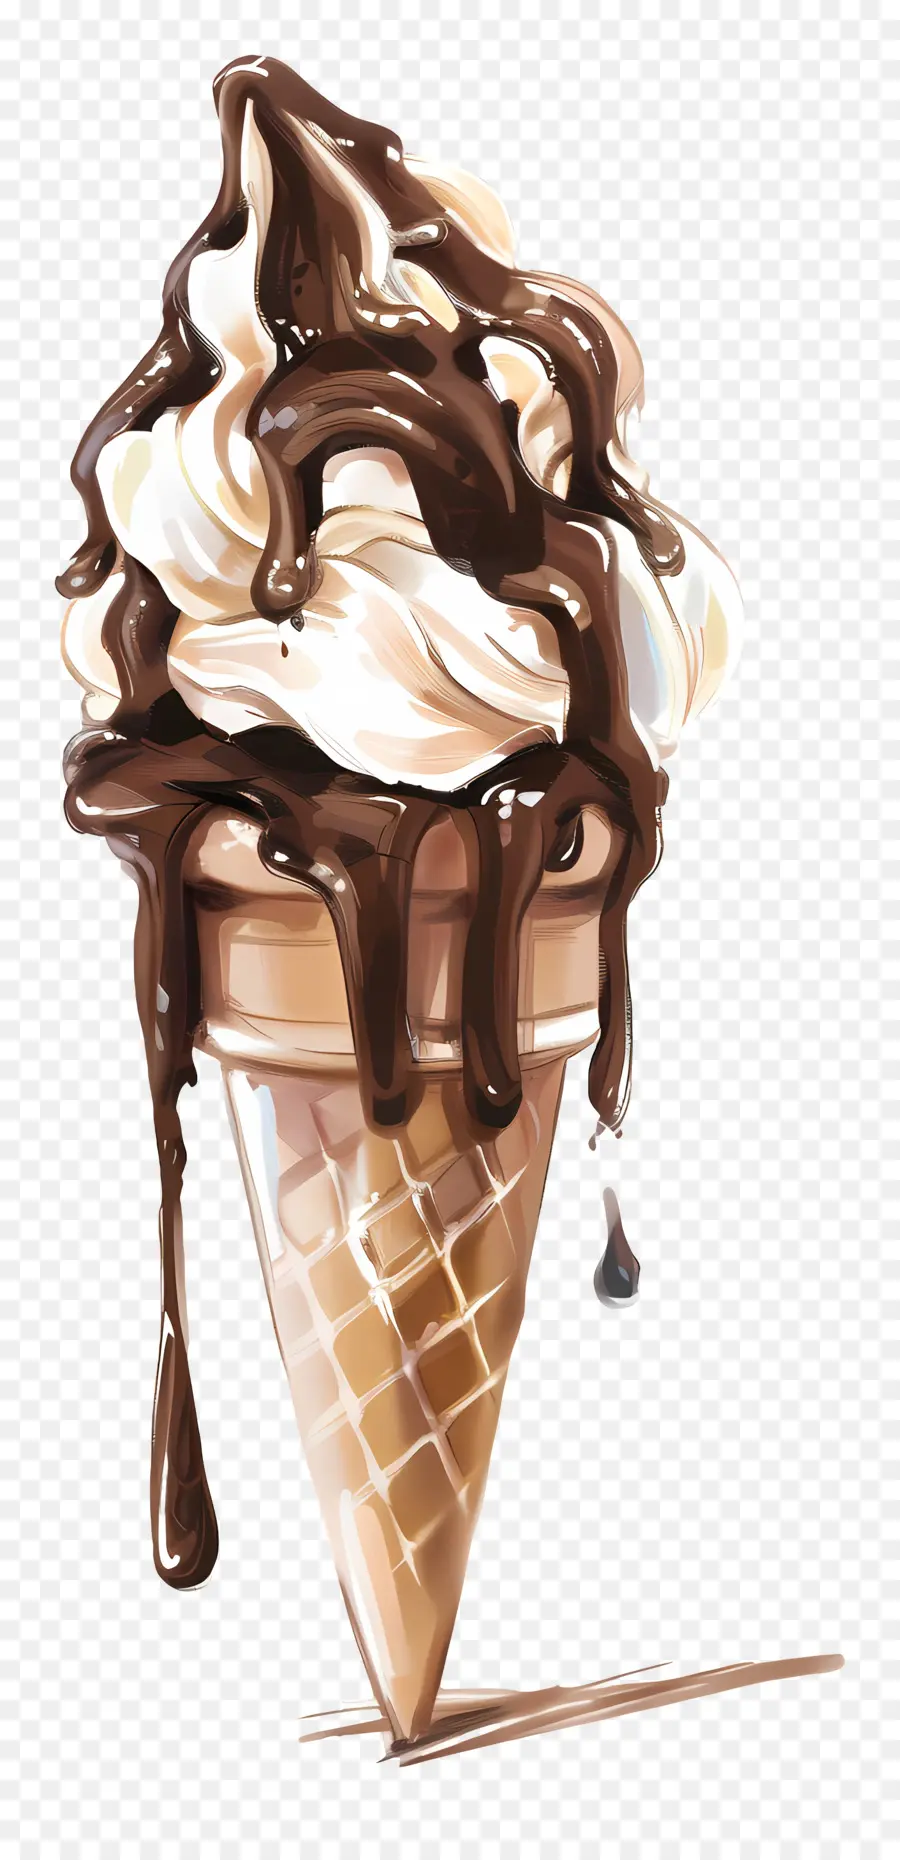 gelato - Cono gelato al cioccolato con rivestimento gocciolante